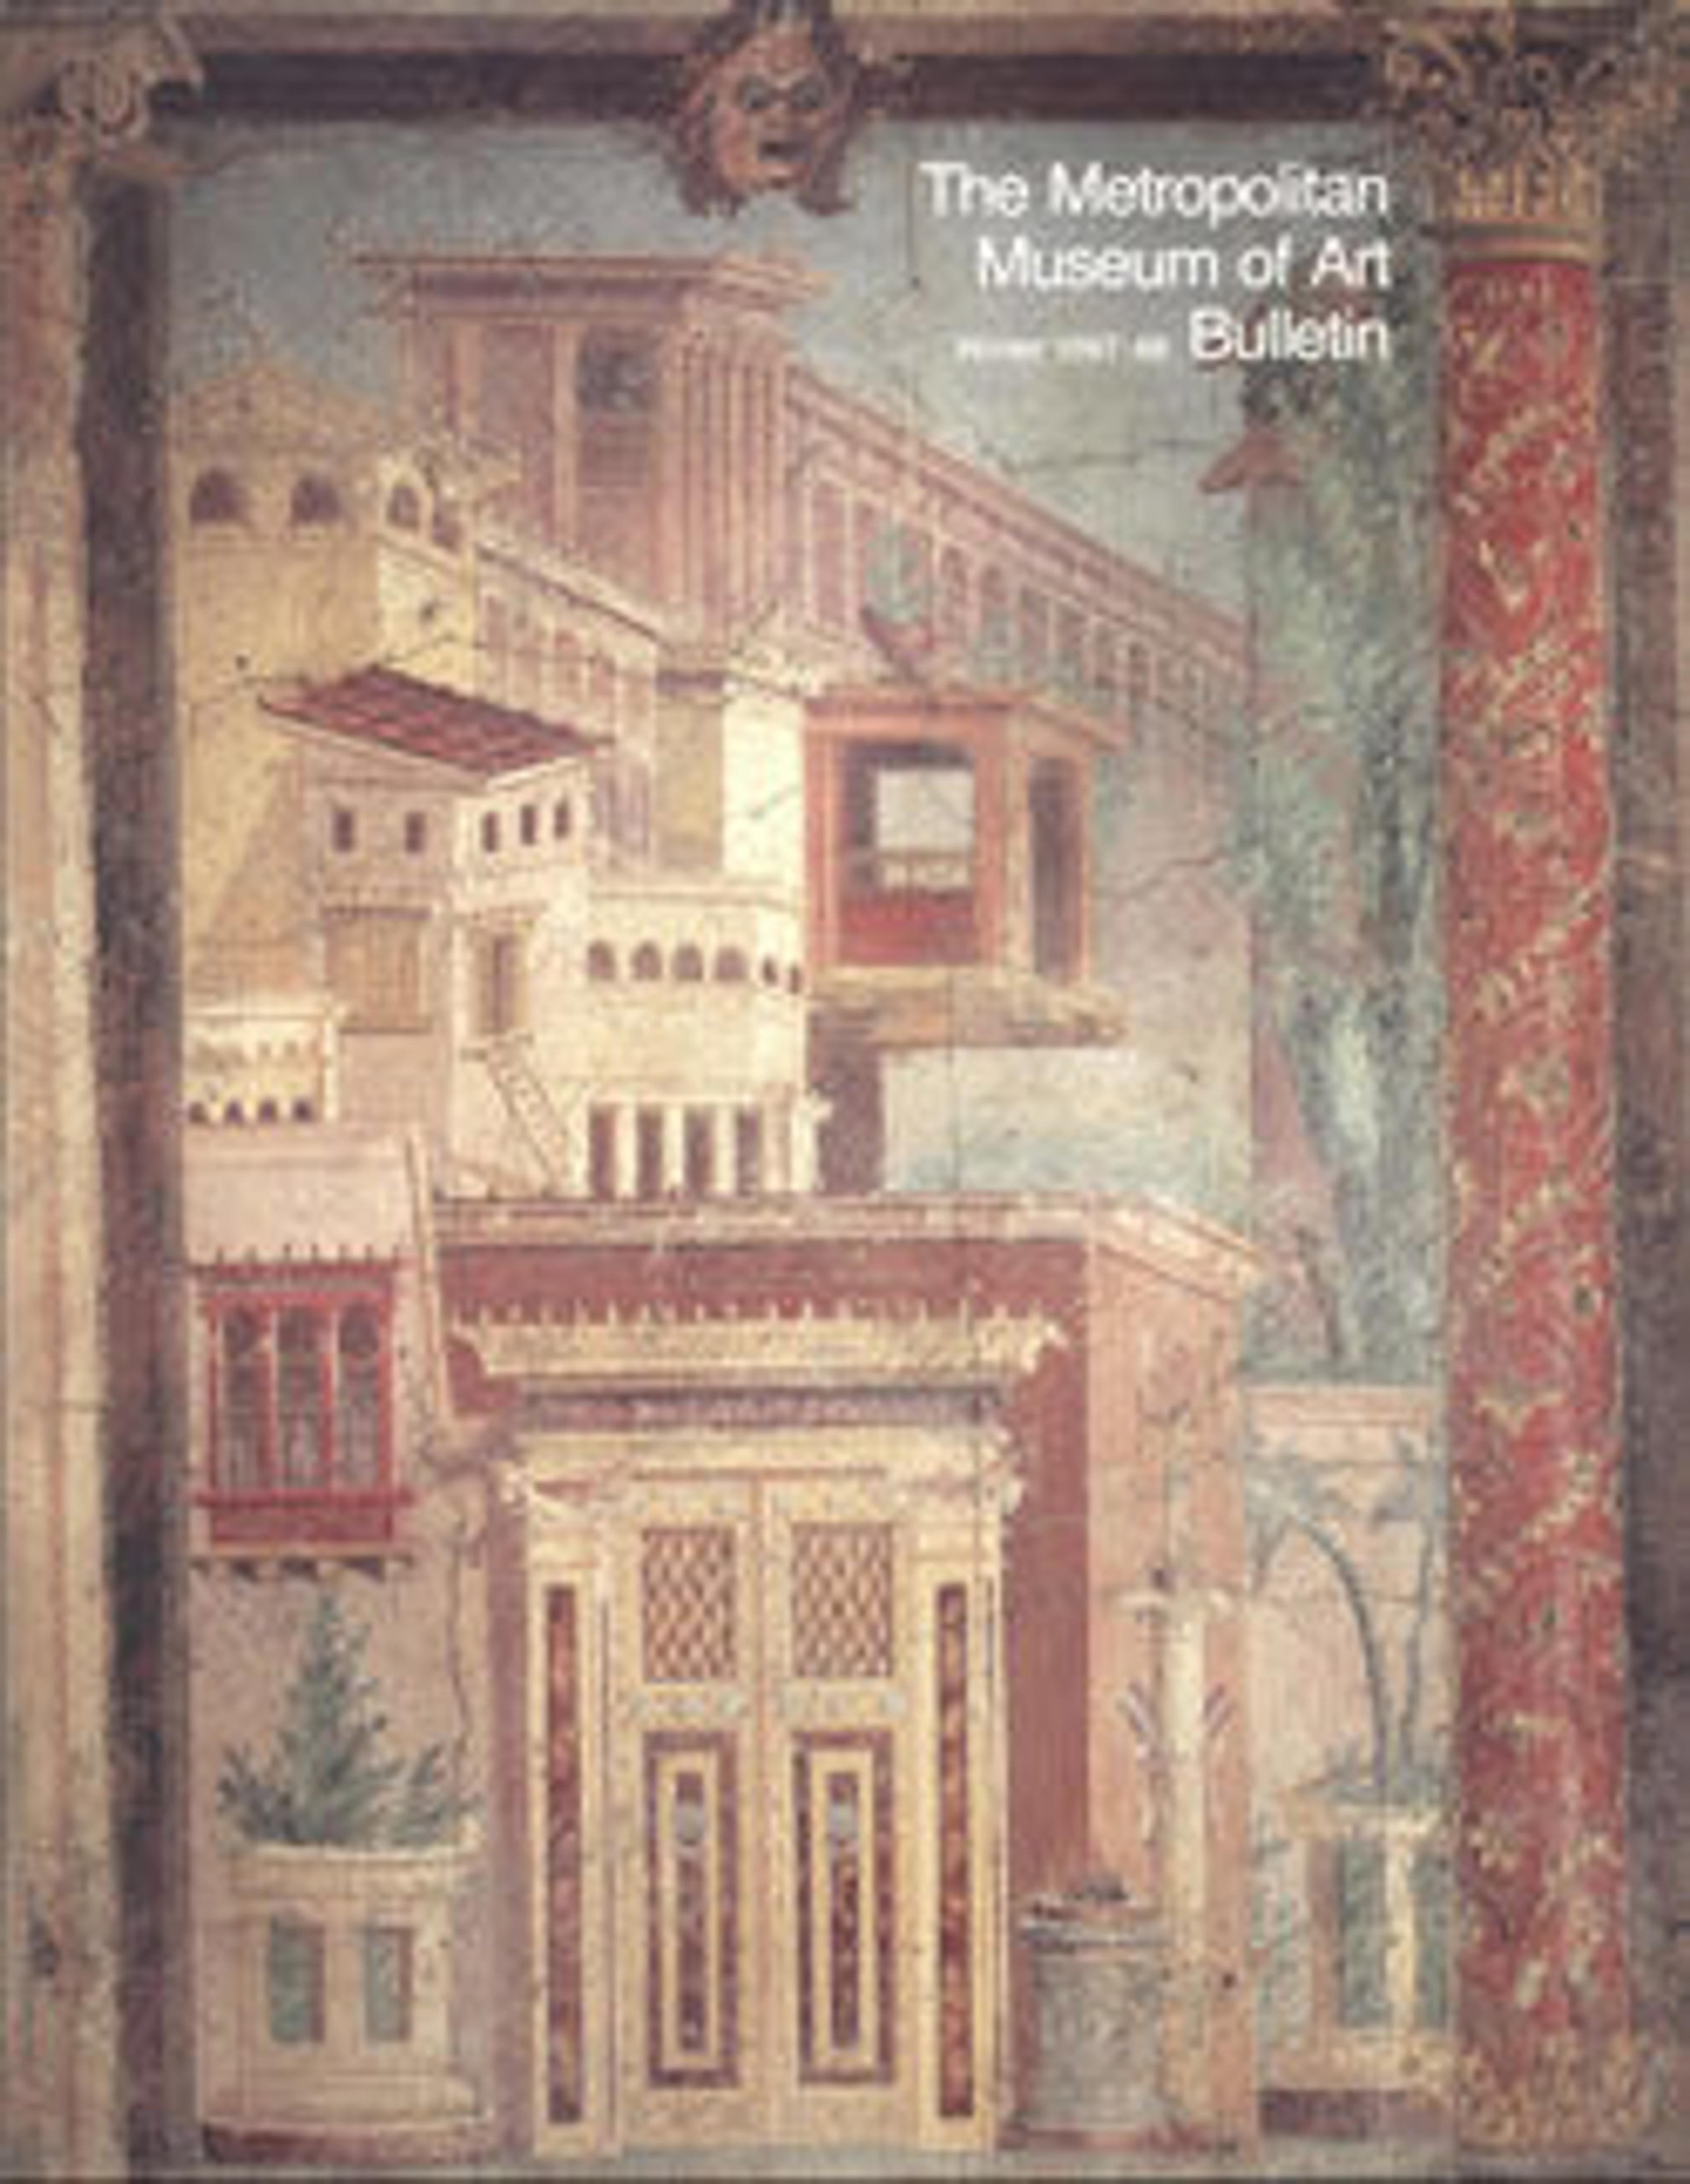 "Pompeian Frescoes in The Metropolitan Museum of Art": The Metropolitan Museum of Art Bulletin, v. 45 no. 3 (Winter, 1987-1988)